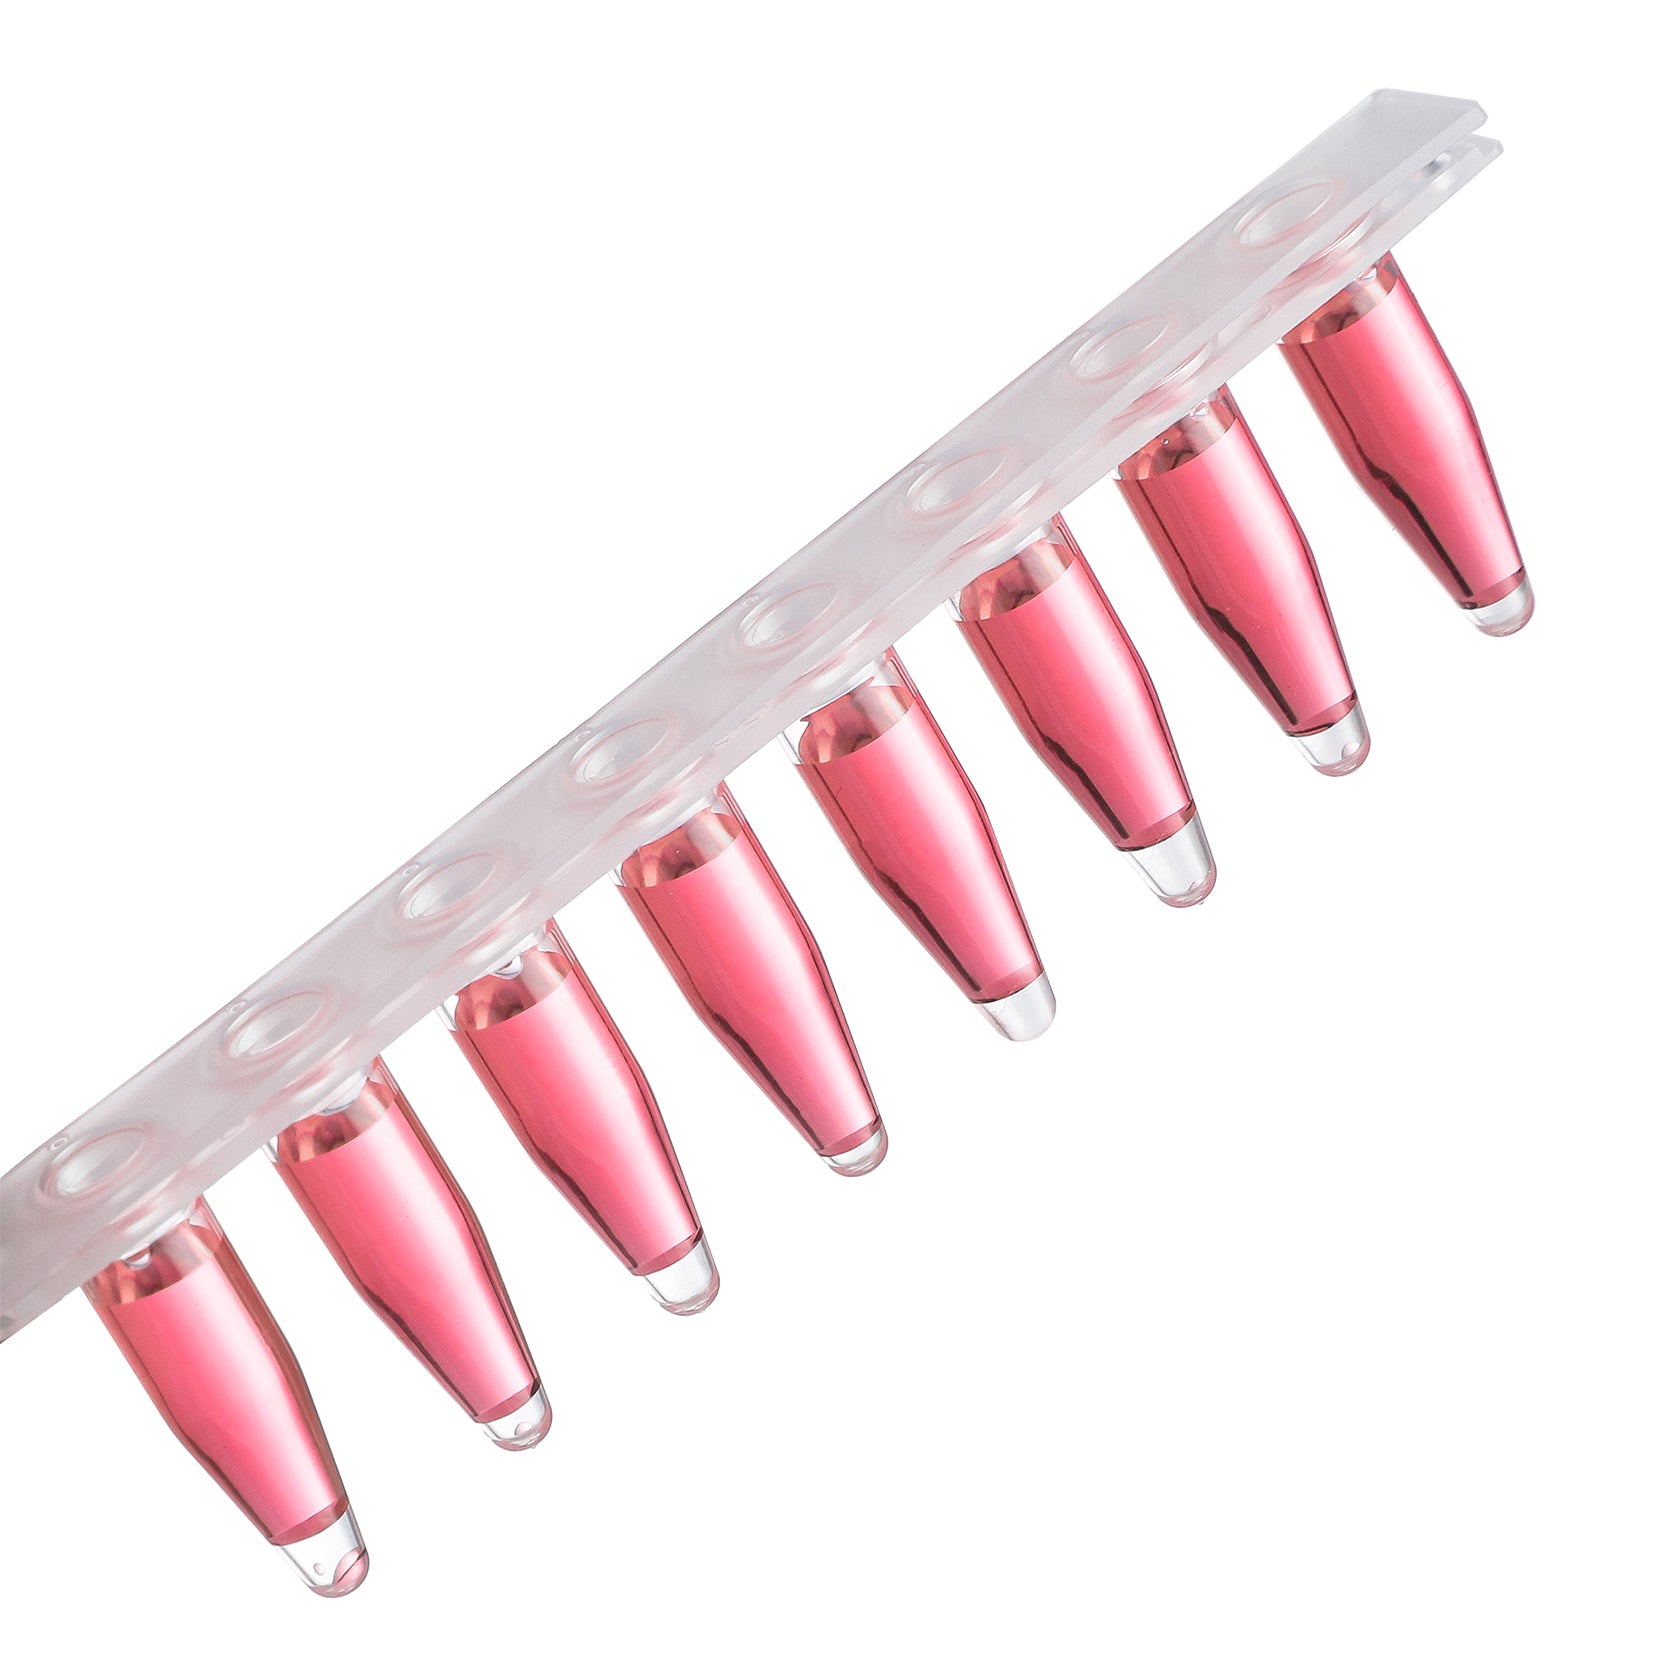 PCR 8-Strip Tube - Four E's USA (A Four E's Scientific Company)